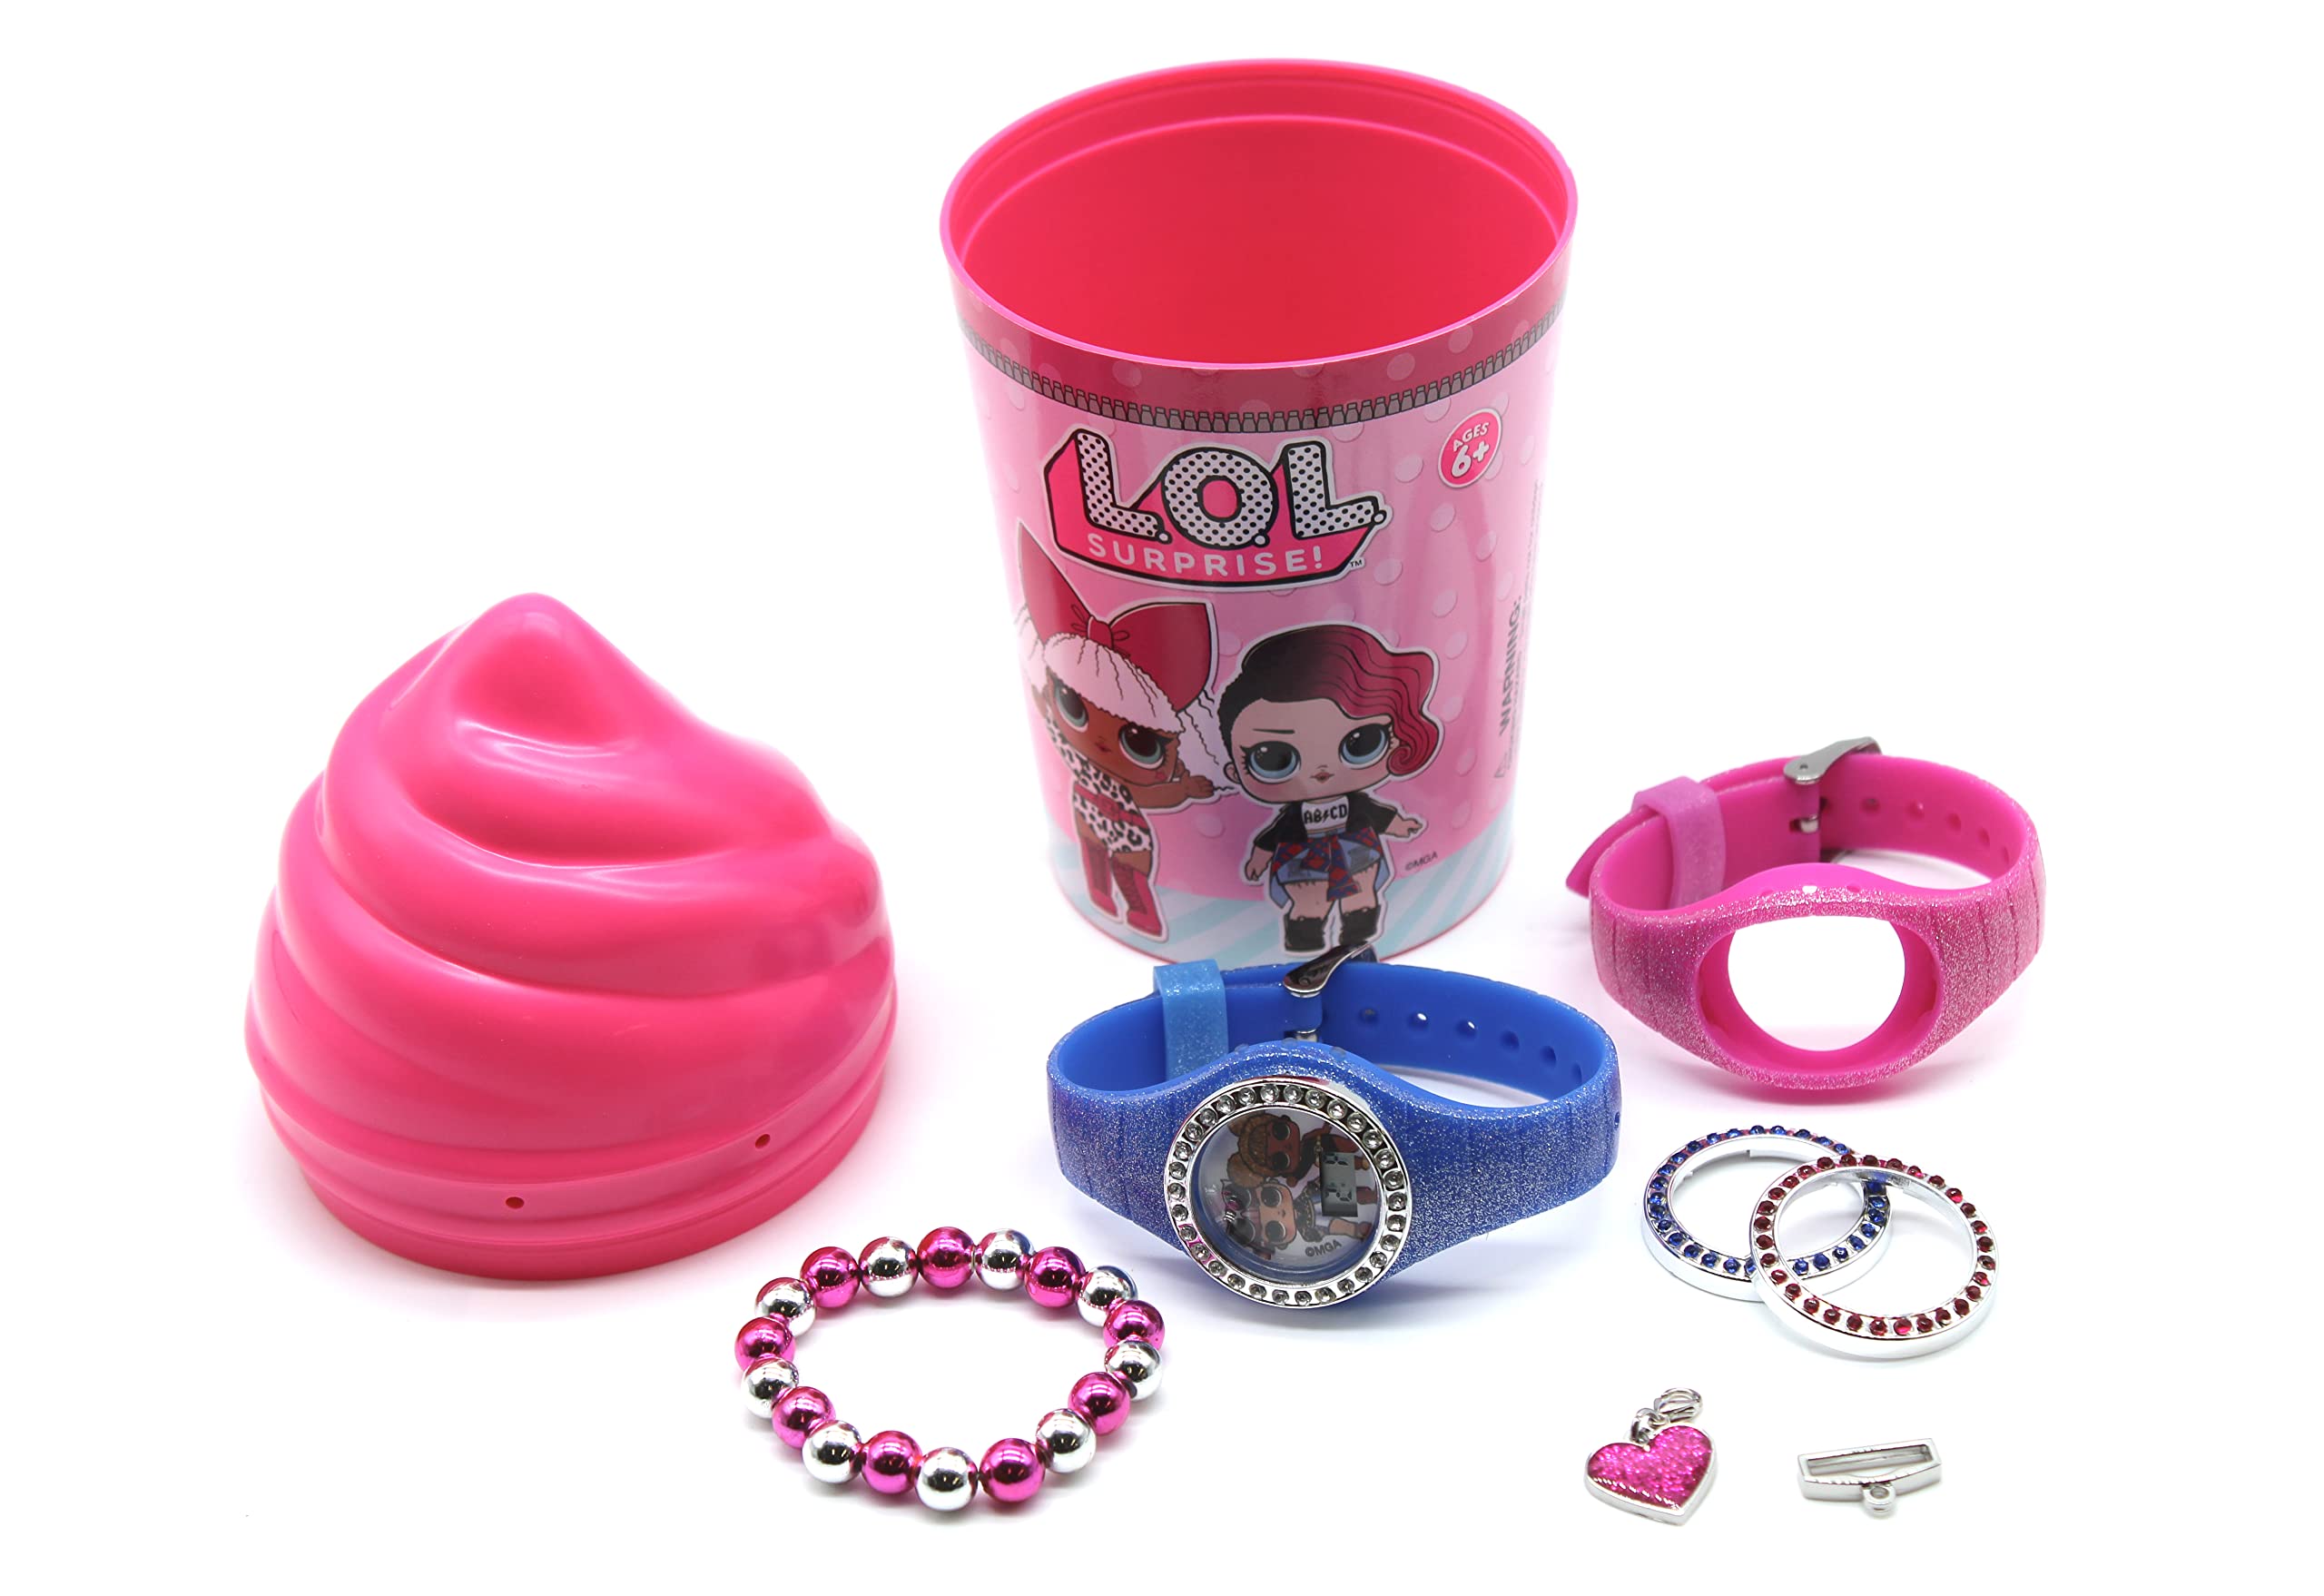 Accutime LOL Surprises Digital Quartz Light Pink Wrist Watch with Unicorns Rainbows Strap for Girls and Boys with Flashing LED Lights (Model: LOL40101AZ)